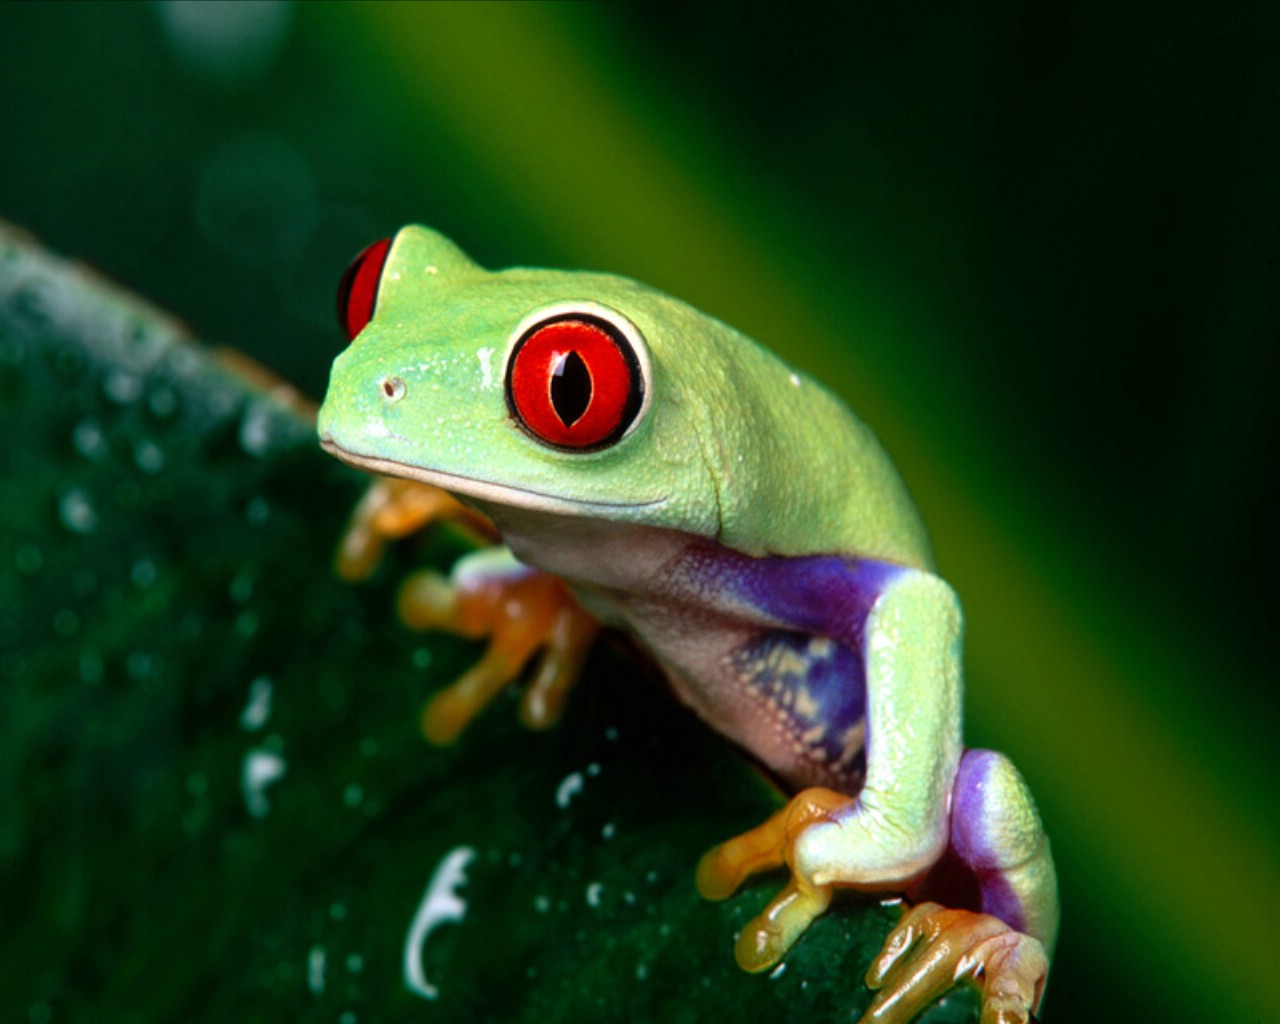 XMWallpaperscom    wallpaper animals frogs Red Eyed Tree Frog 1 1280x1024